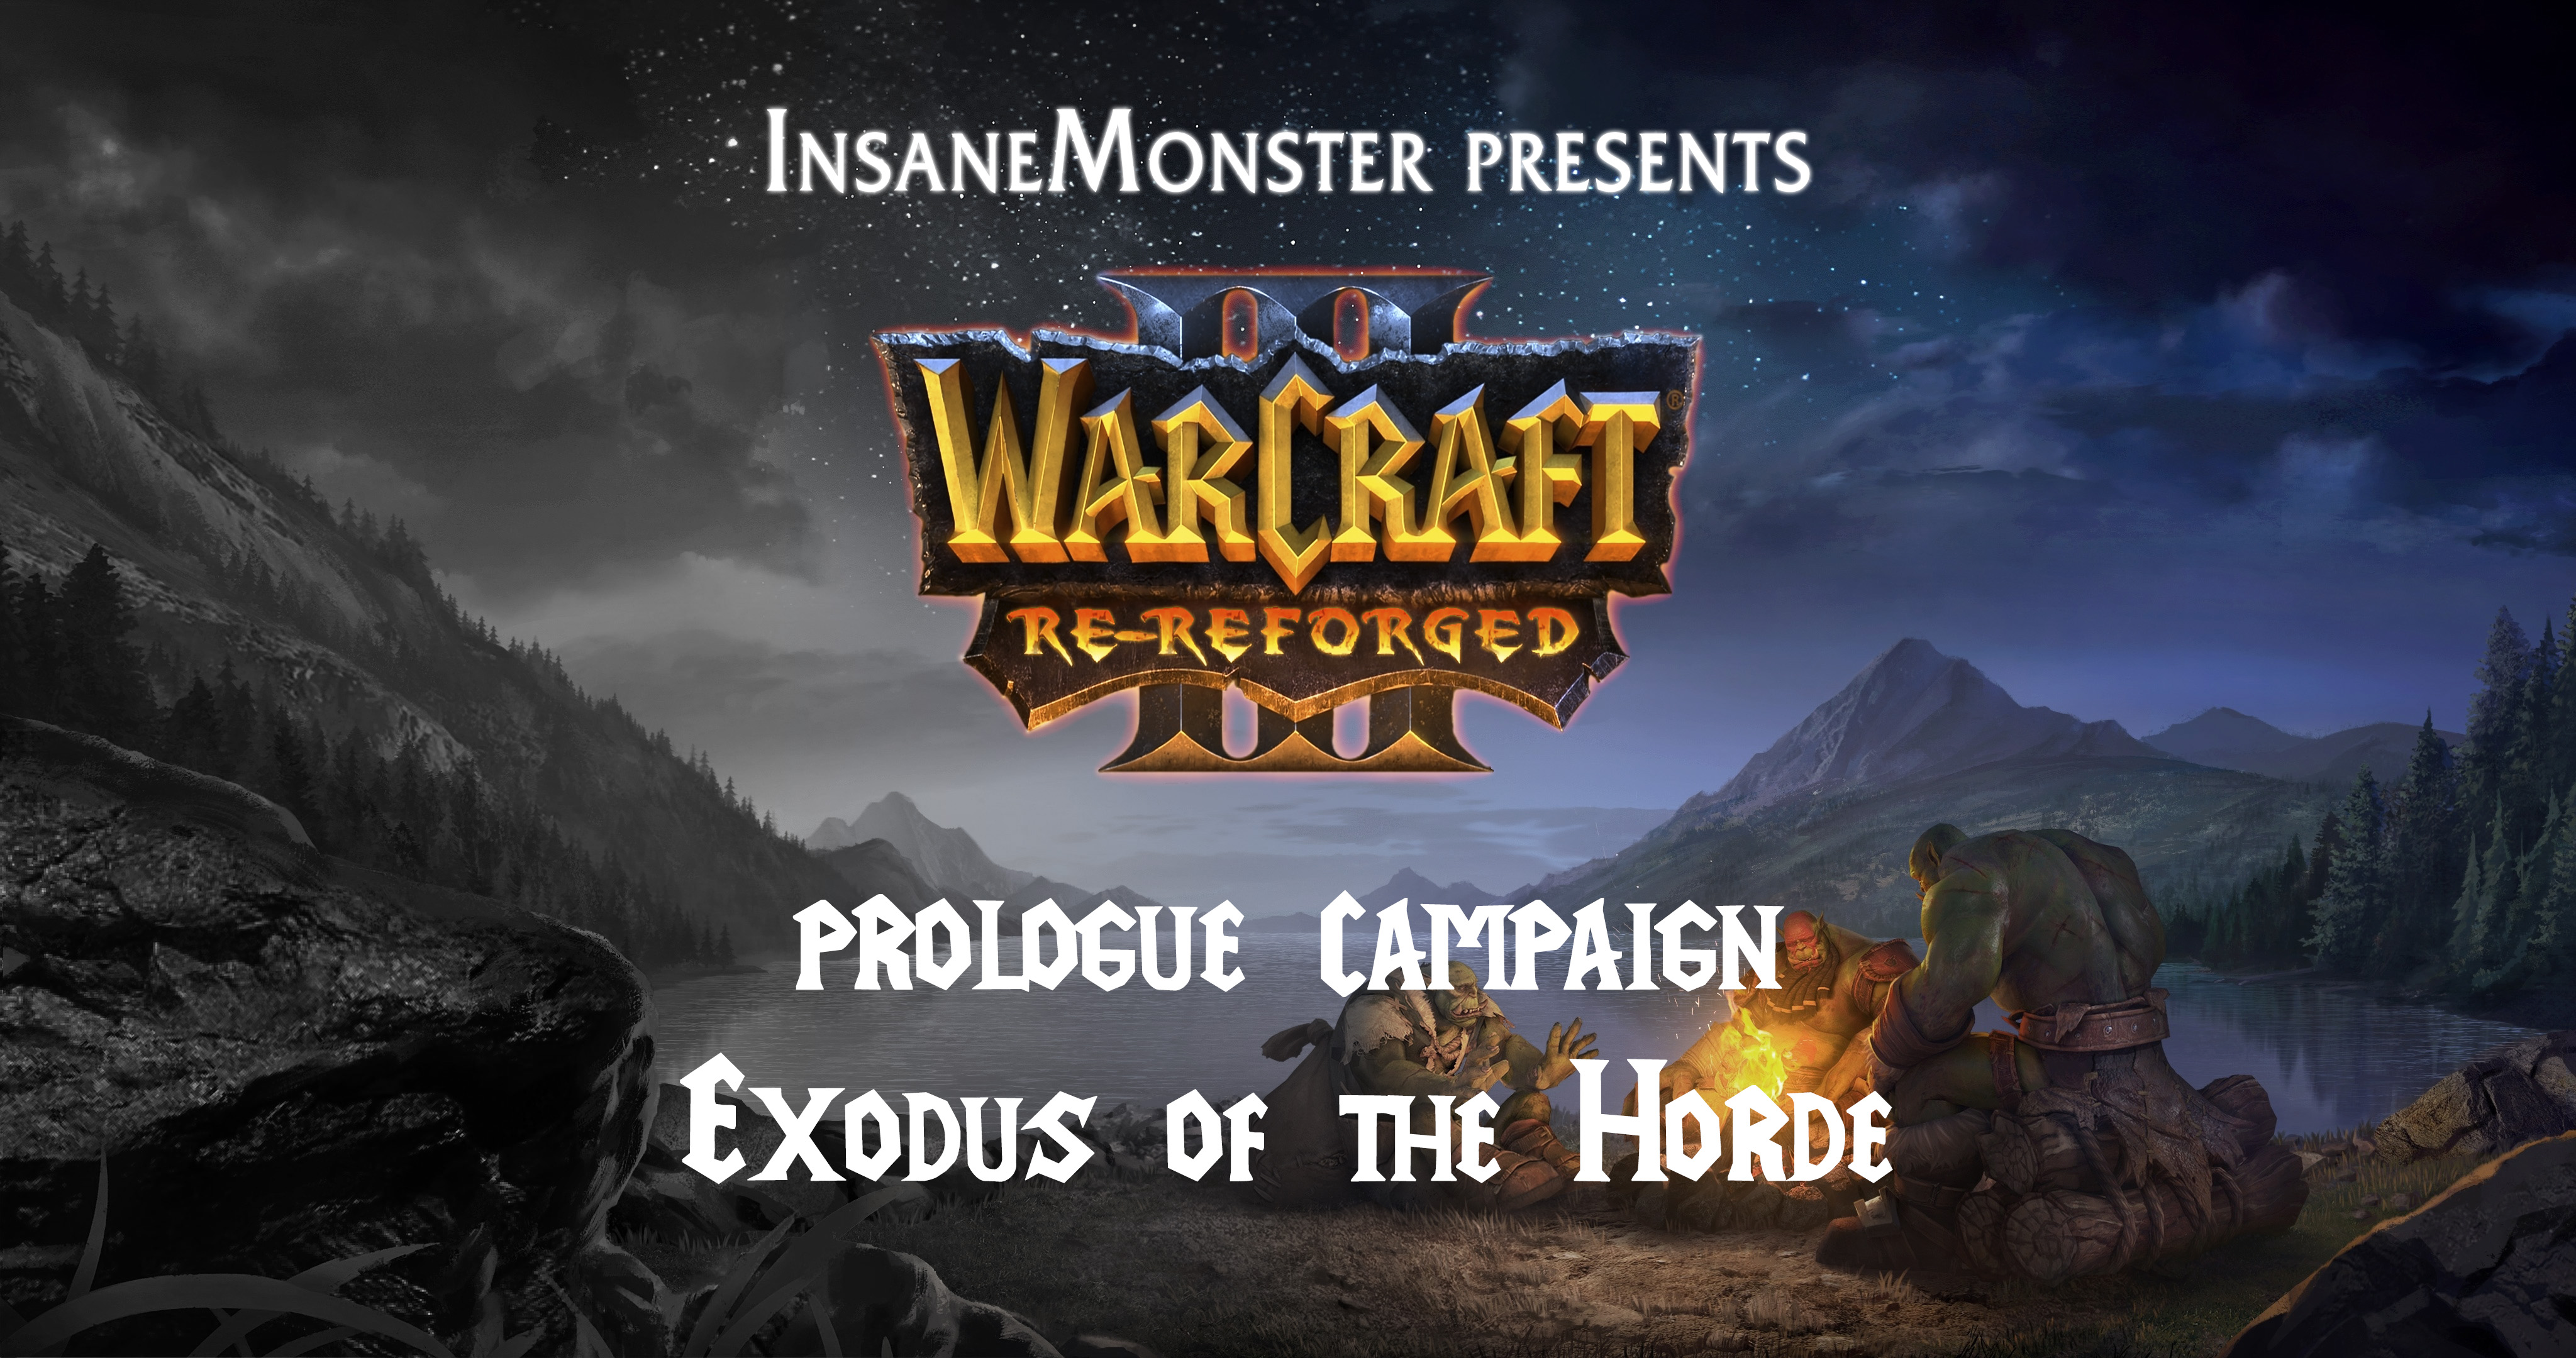 Warcraft 3 Re-Reforged Prologue Campaign Logo Plain